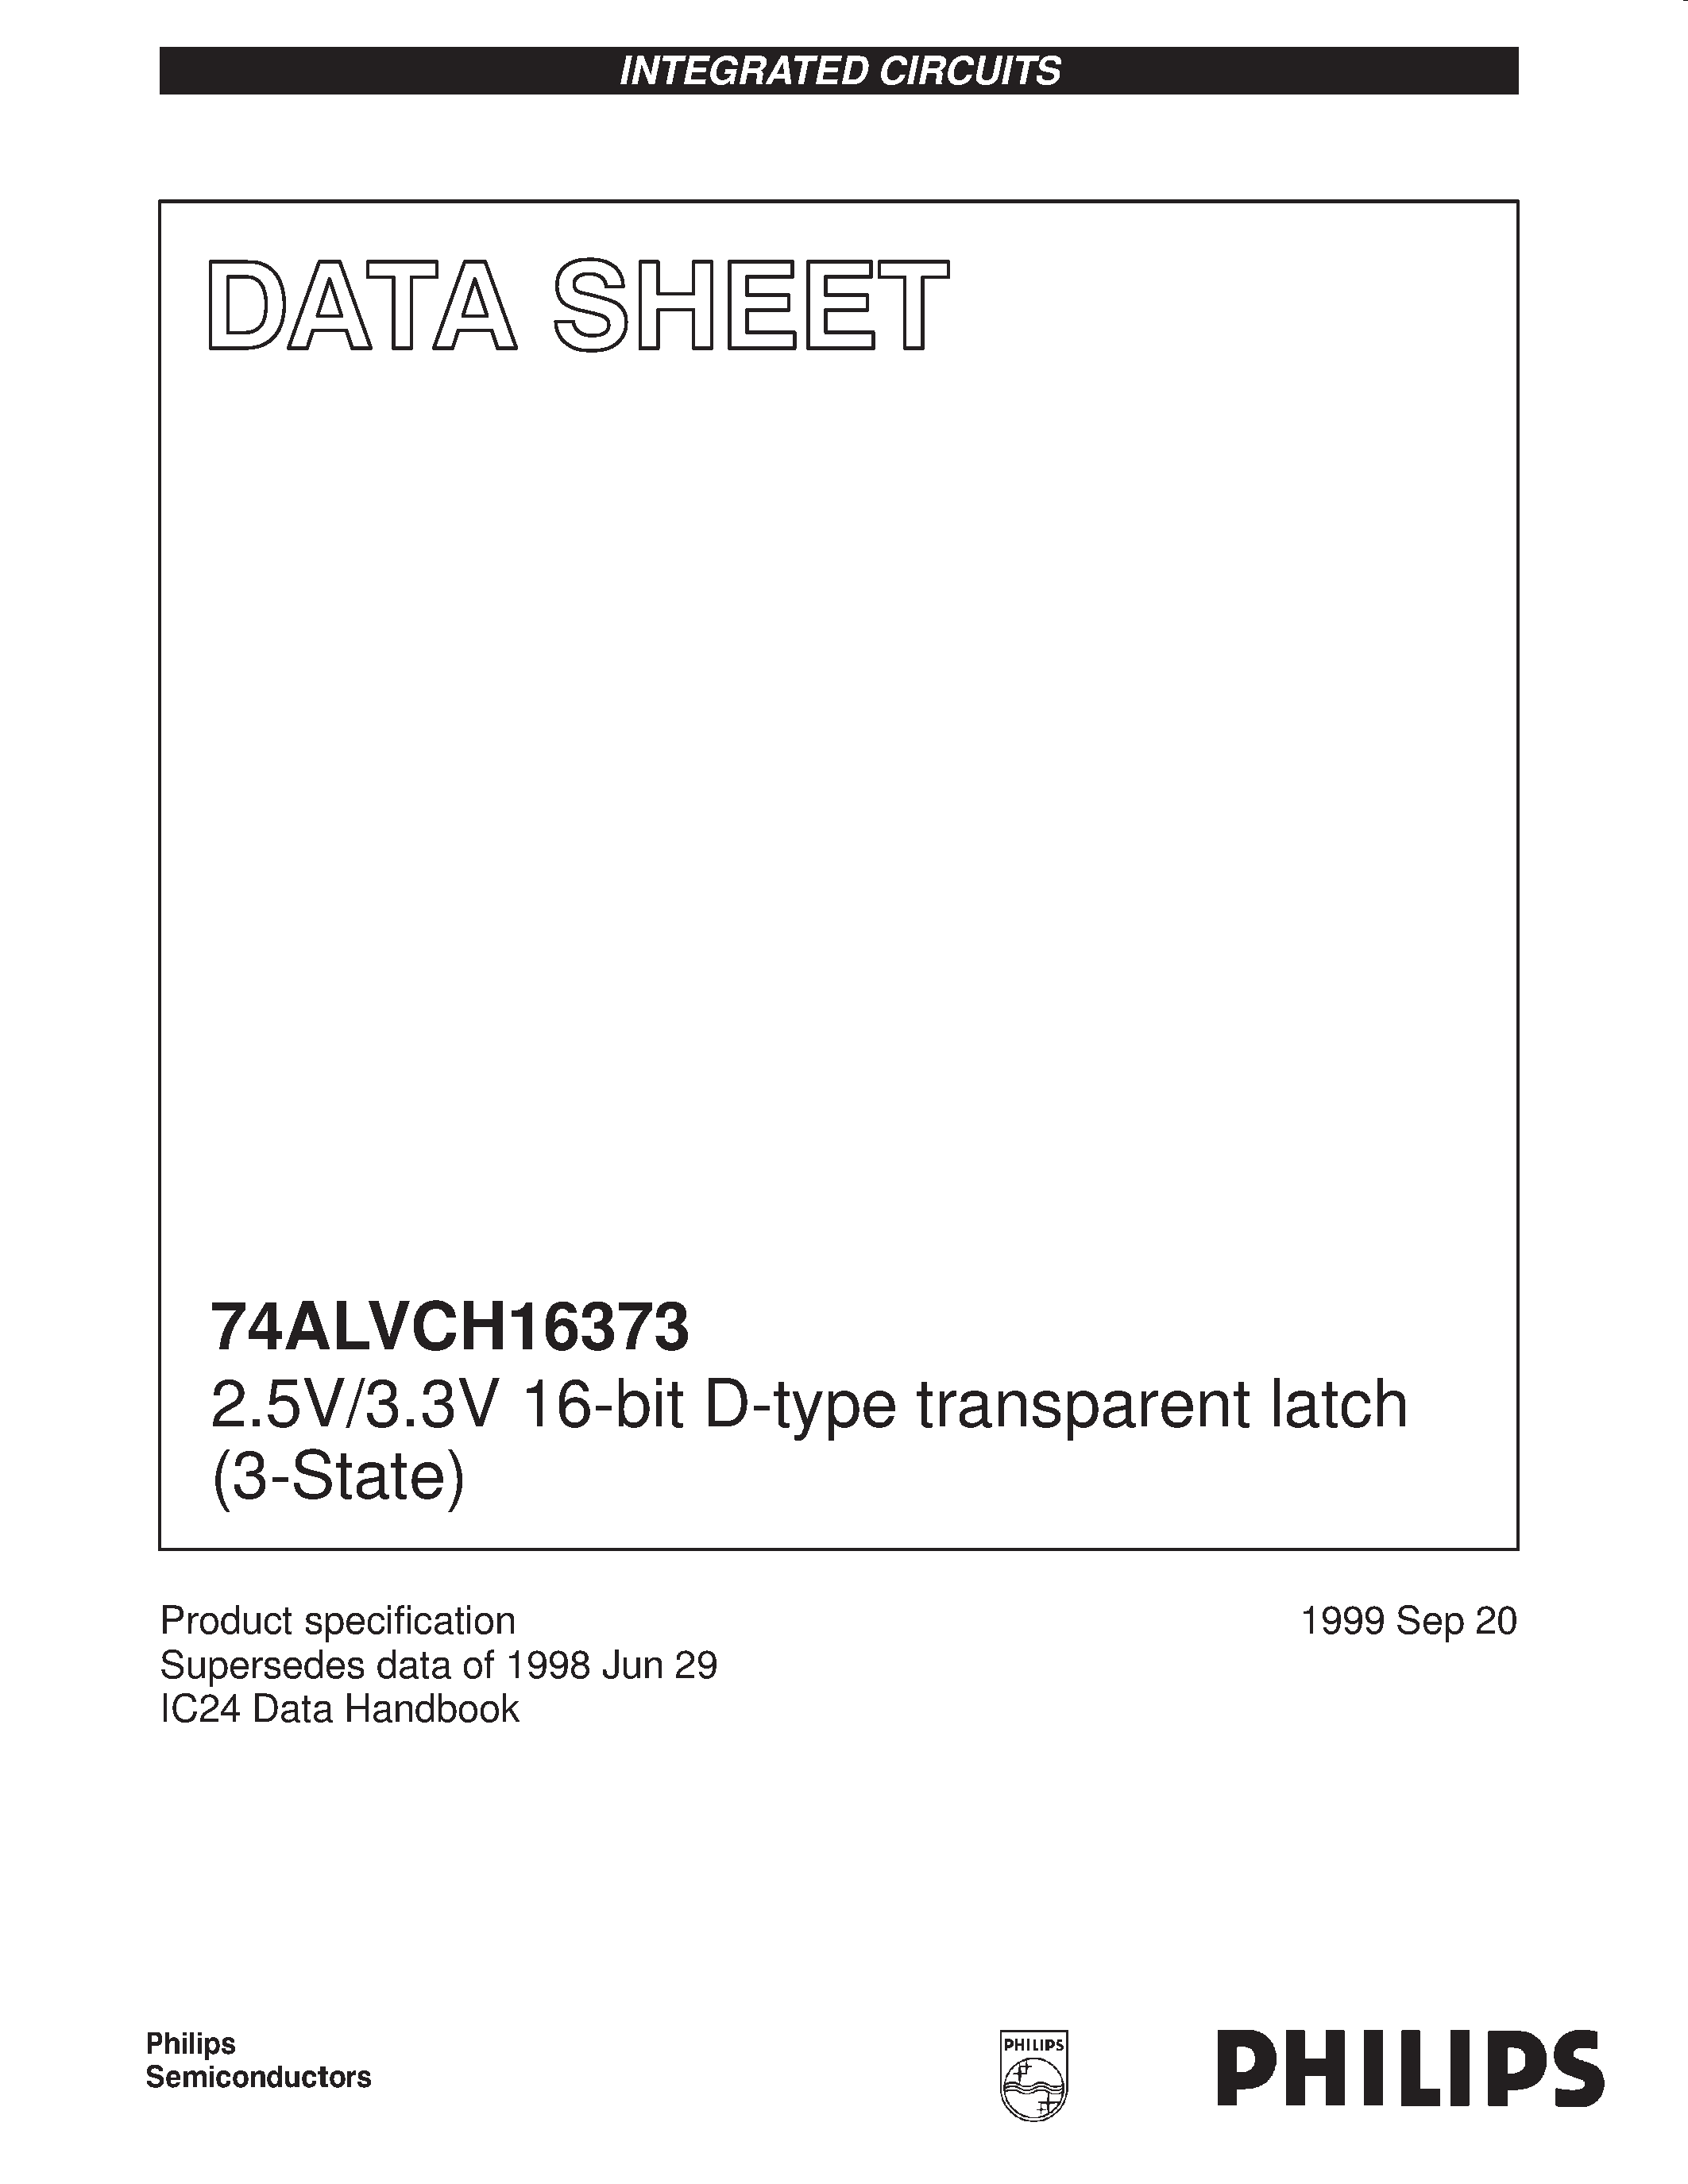 Datasheet 74ALVCH16373DL - 2.5V/3.3V 16-bit D-type transparent latch 3-State page 1